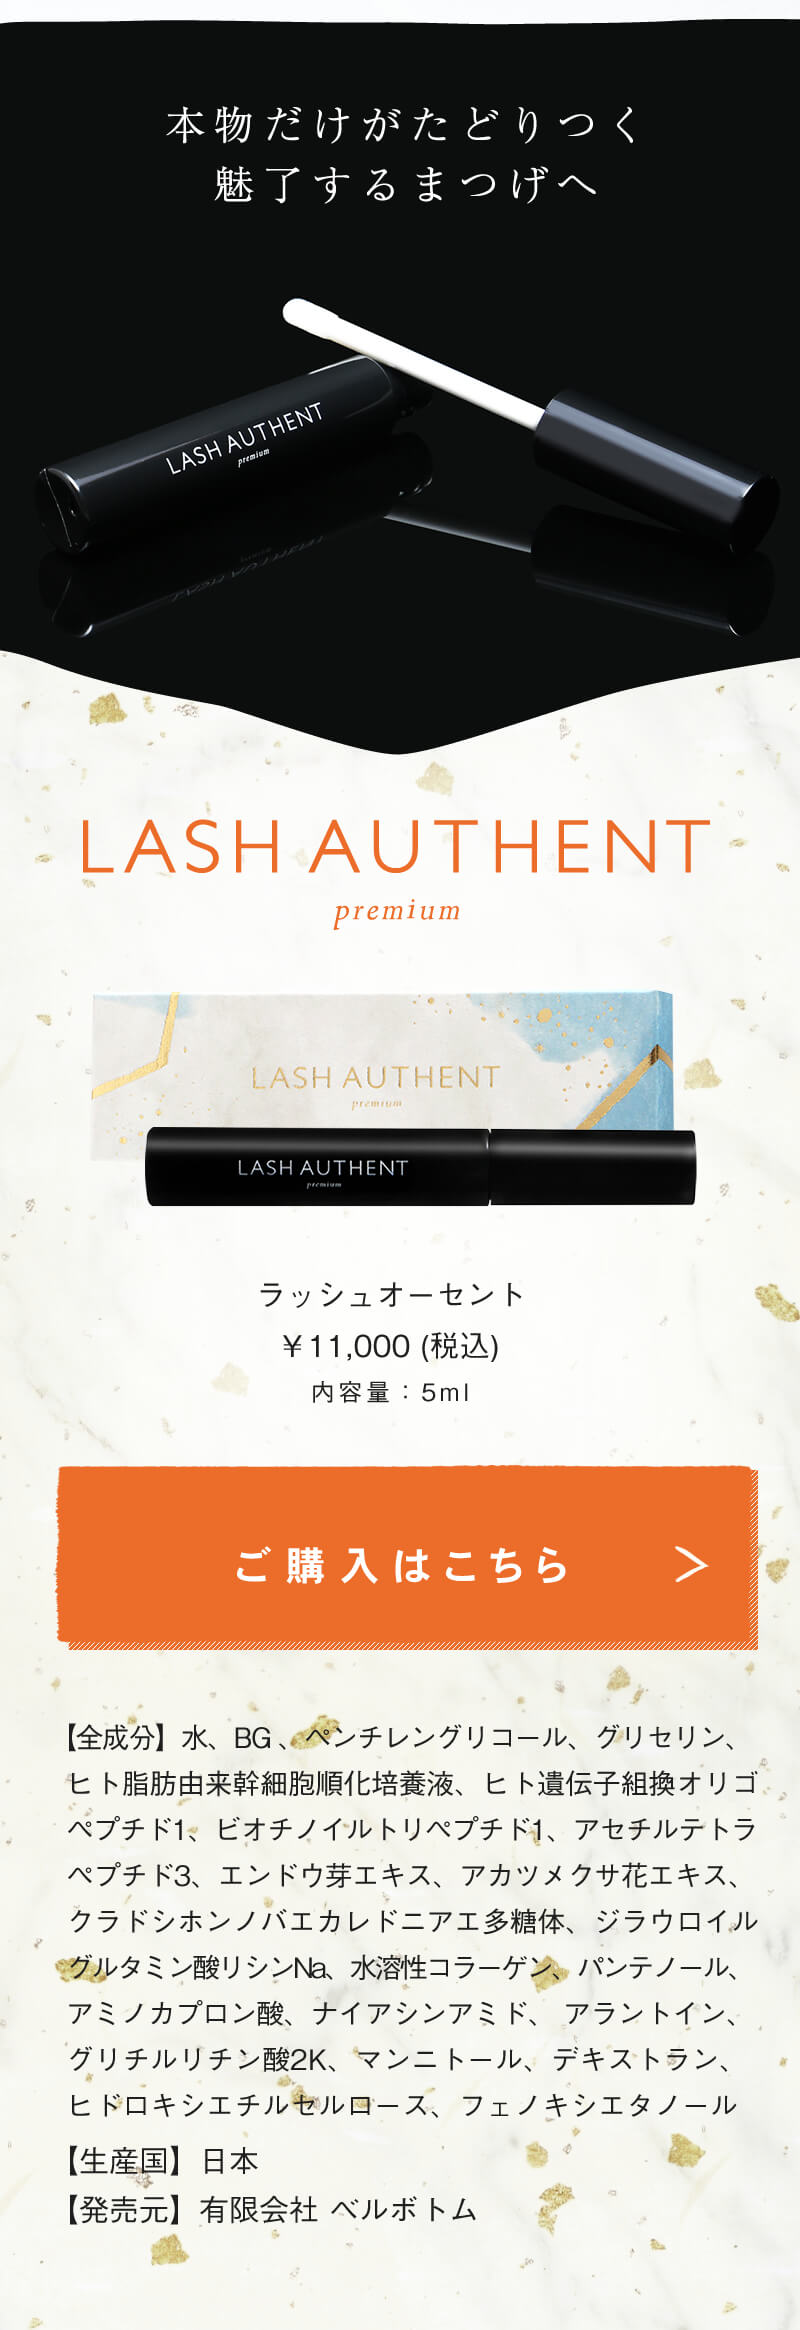 LASH AUTHENT ラッシュオーセント 5ml【定価販売条件・楽天販売可】 ARTISTAR STORE